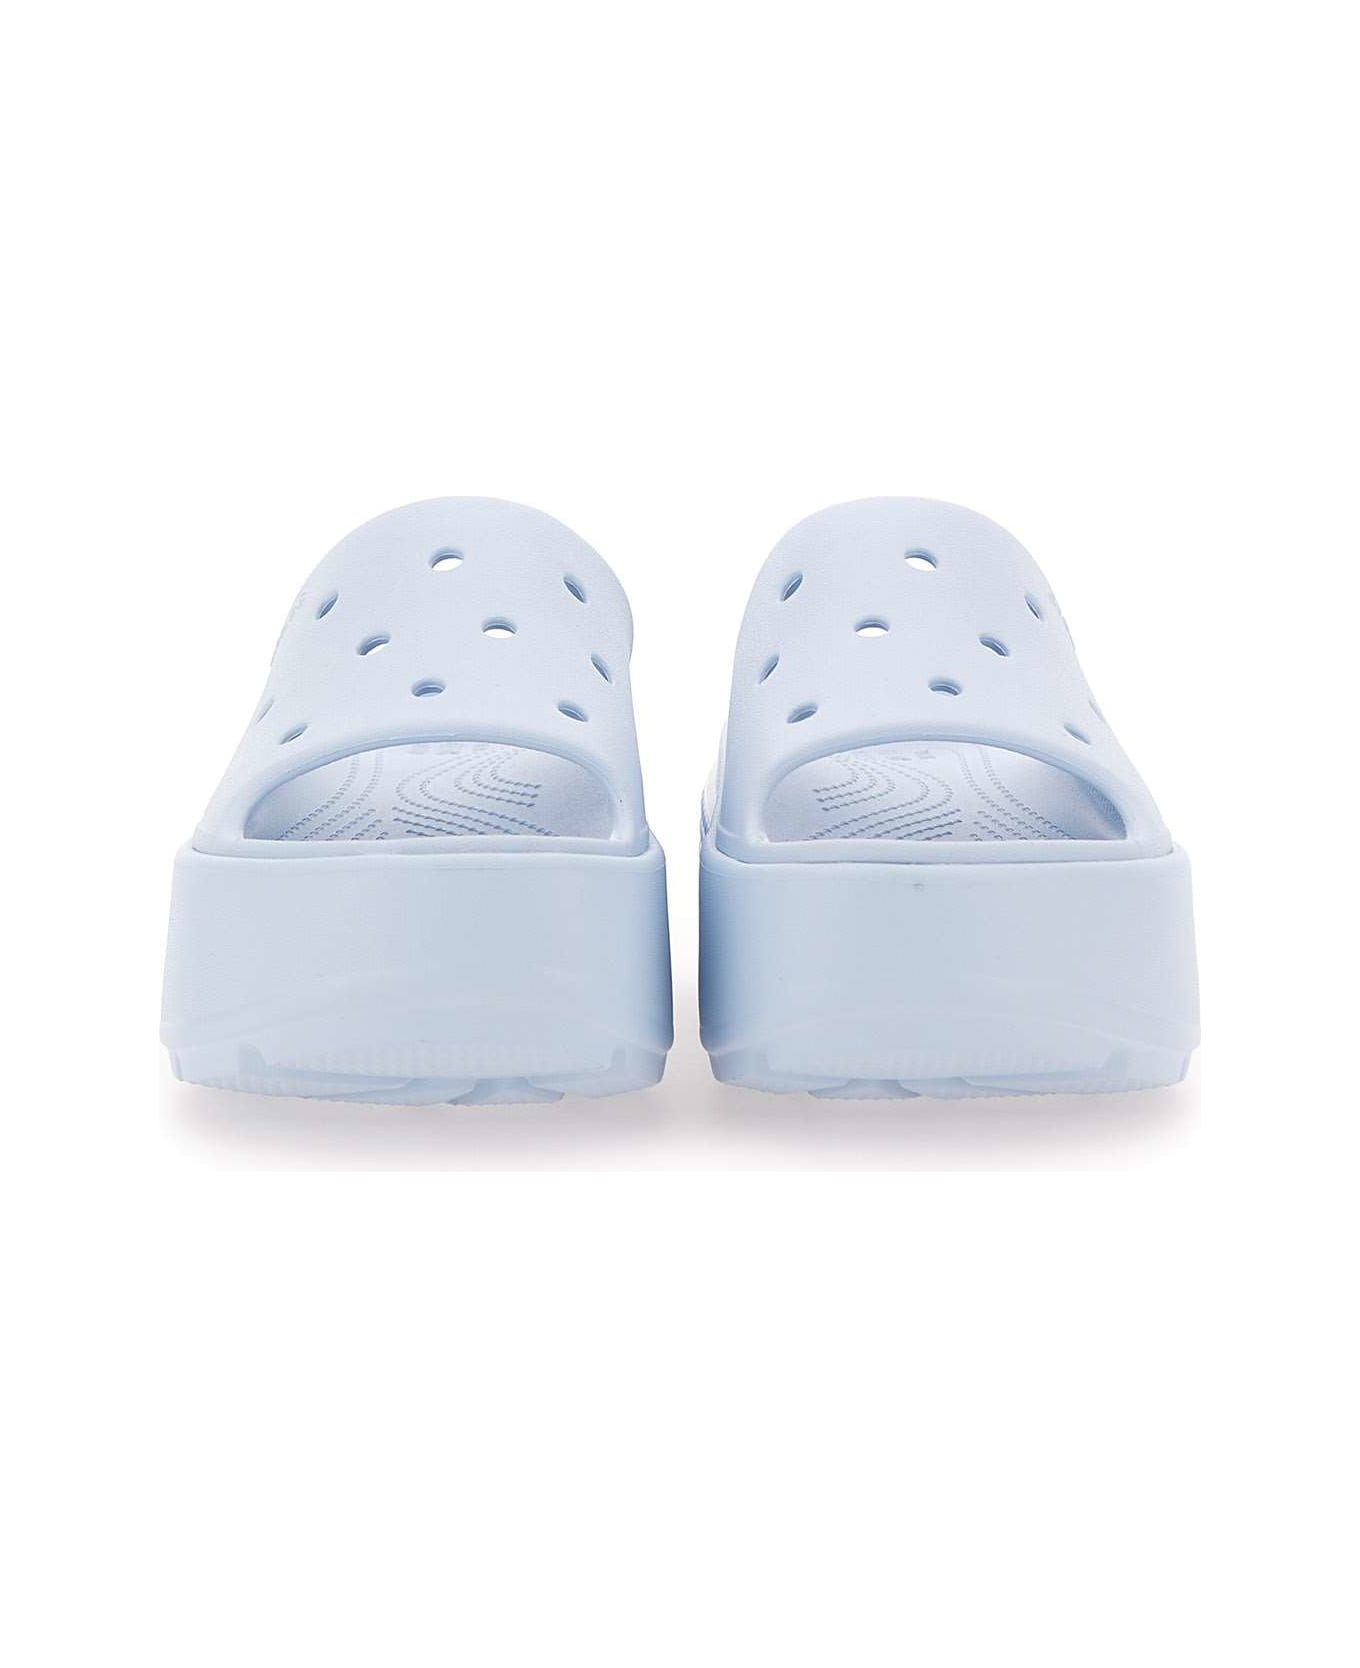 Crocs 'stomp Slide' Sandals - Dreamscape